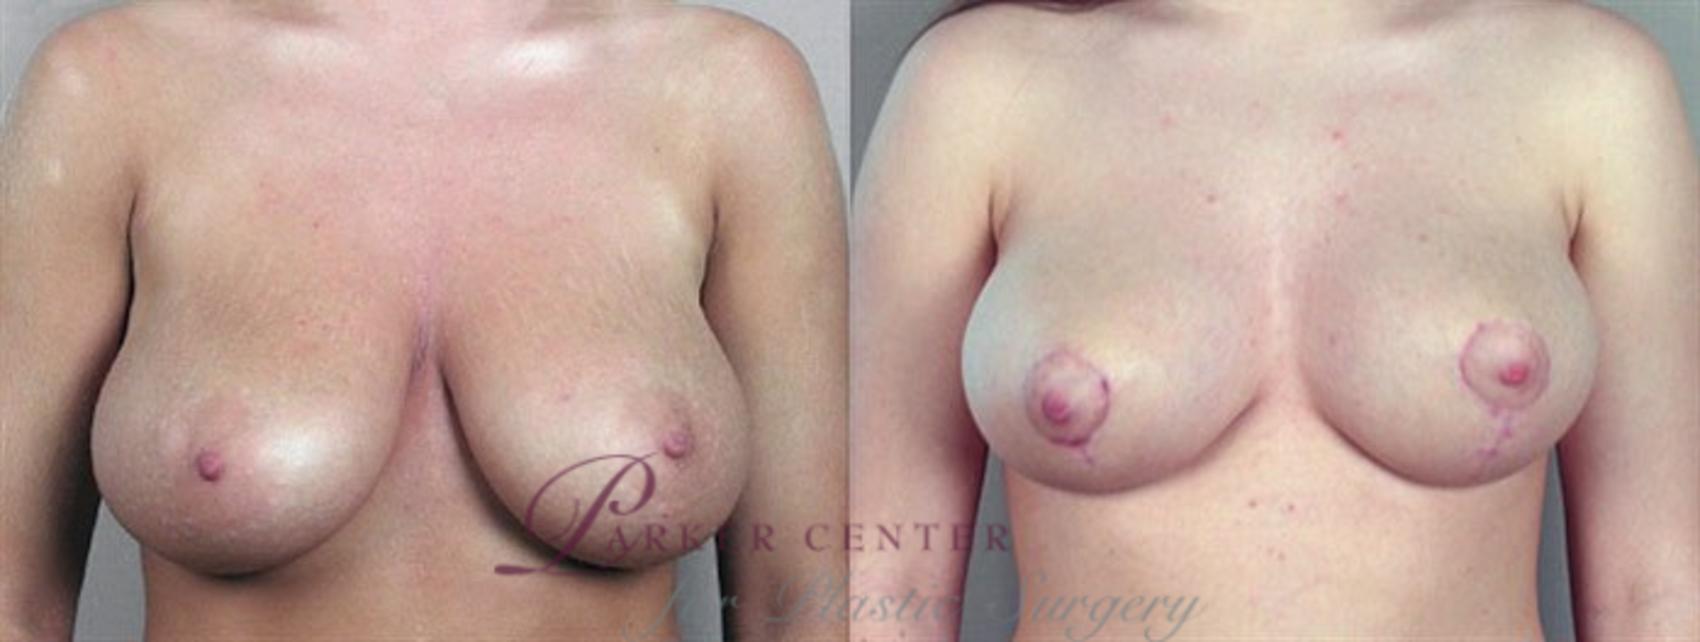 Breast Lift Case 531 Before & After View #1 | Paramus, NJ | Parker Center for Plastic Surgery